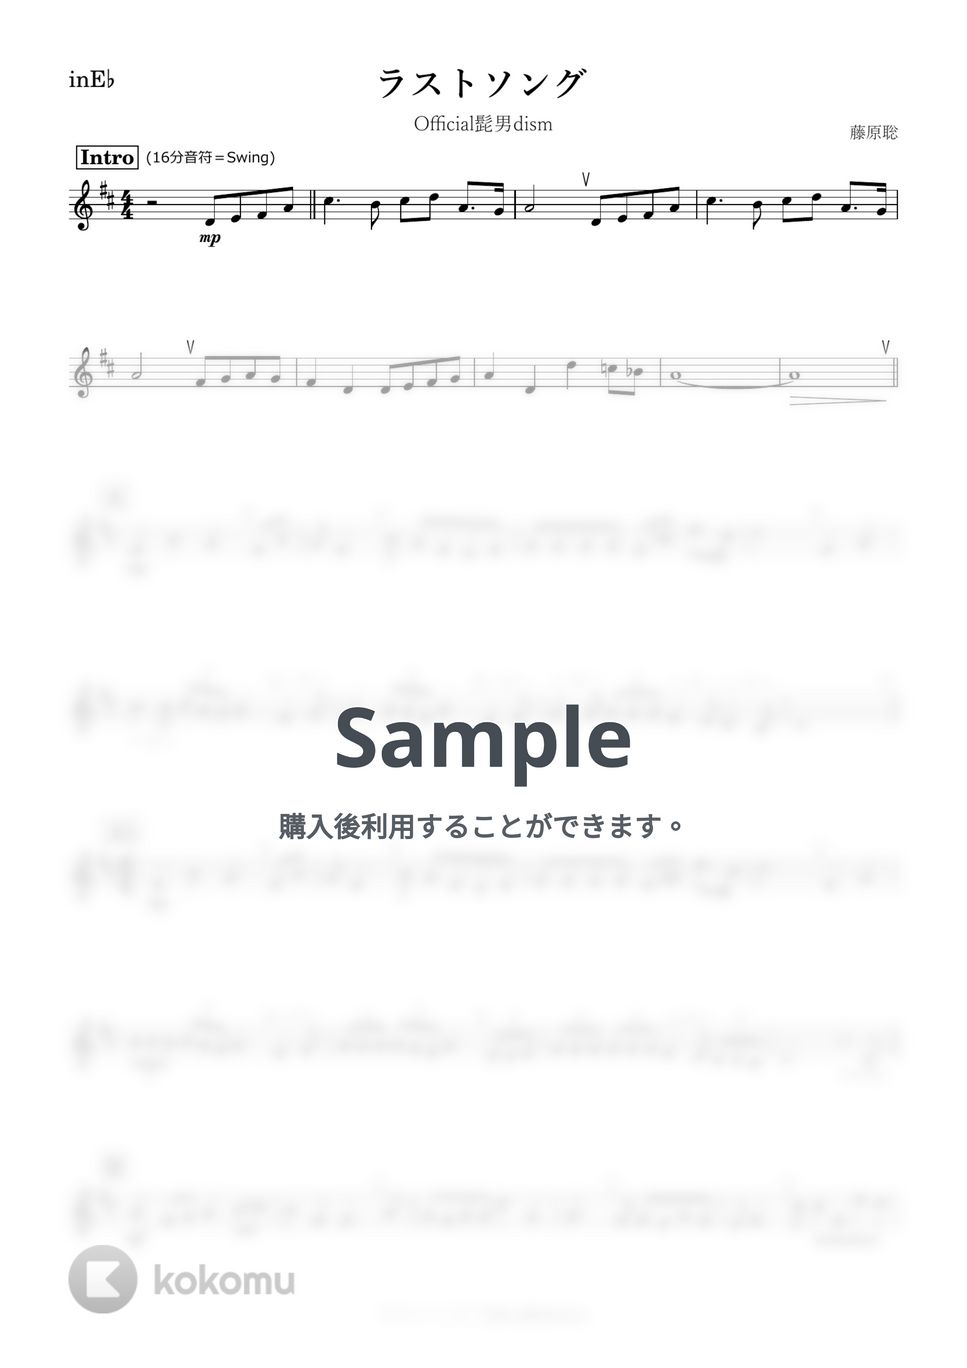 Official髭男dism - ラストソング (E♭) by kanamusic